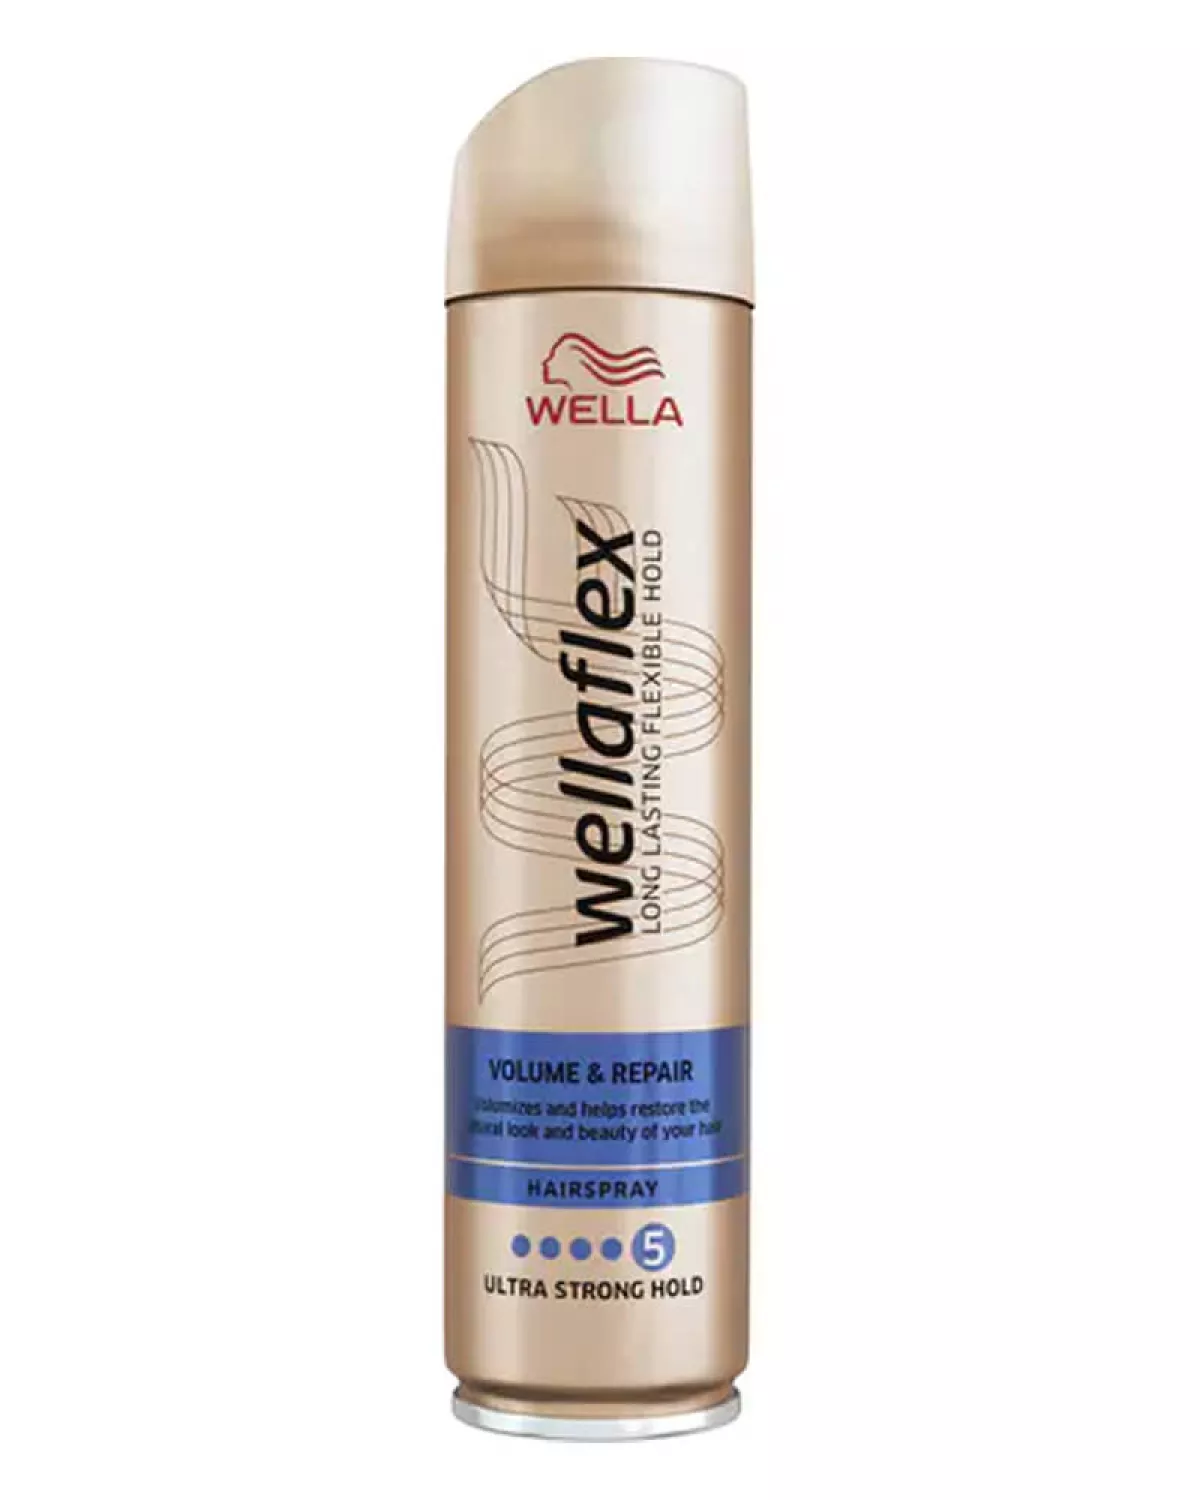 #1 - Wella Wellaflex Volume & Repair 250 ml